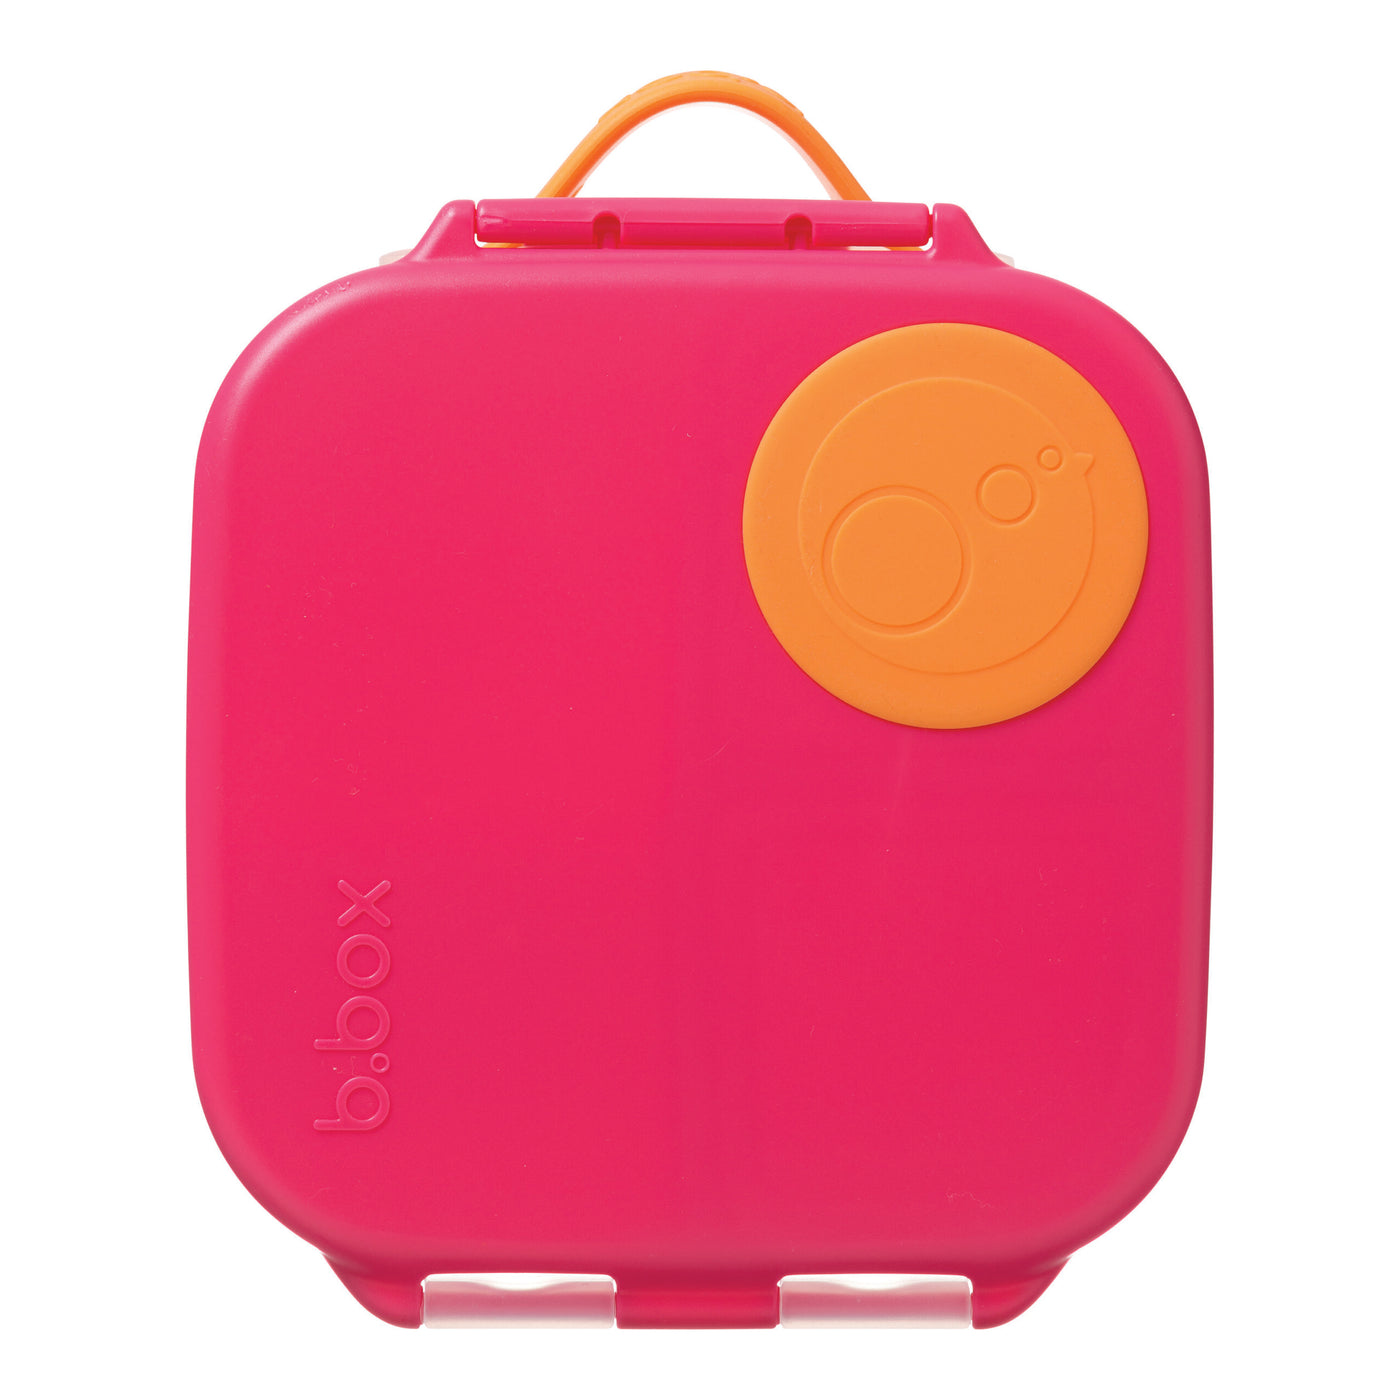 Mini Lunch Box: Strawberry Shake - Pink Orange | b.box